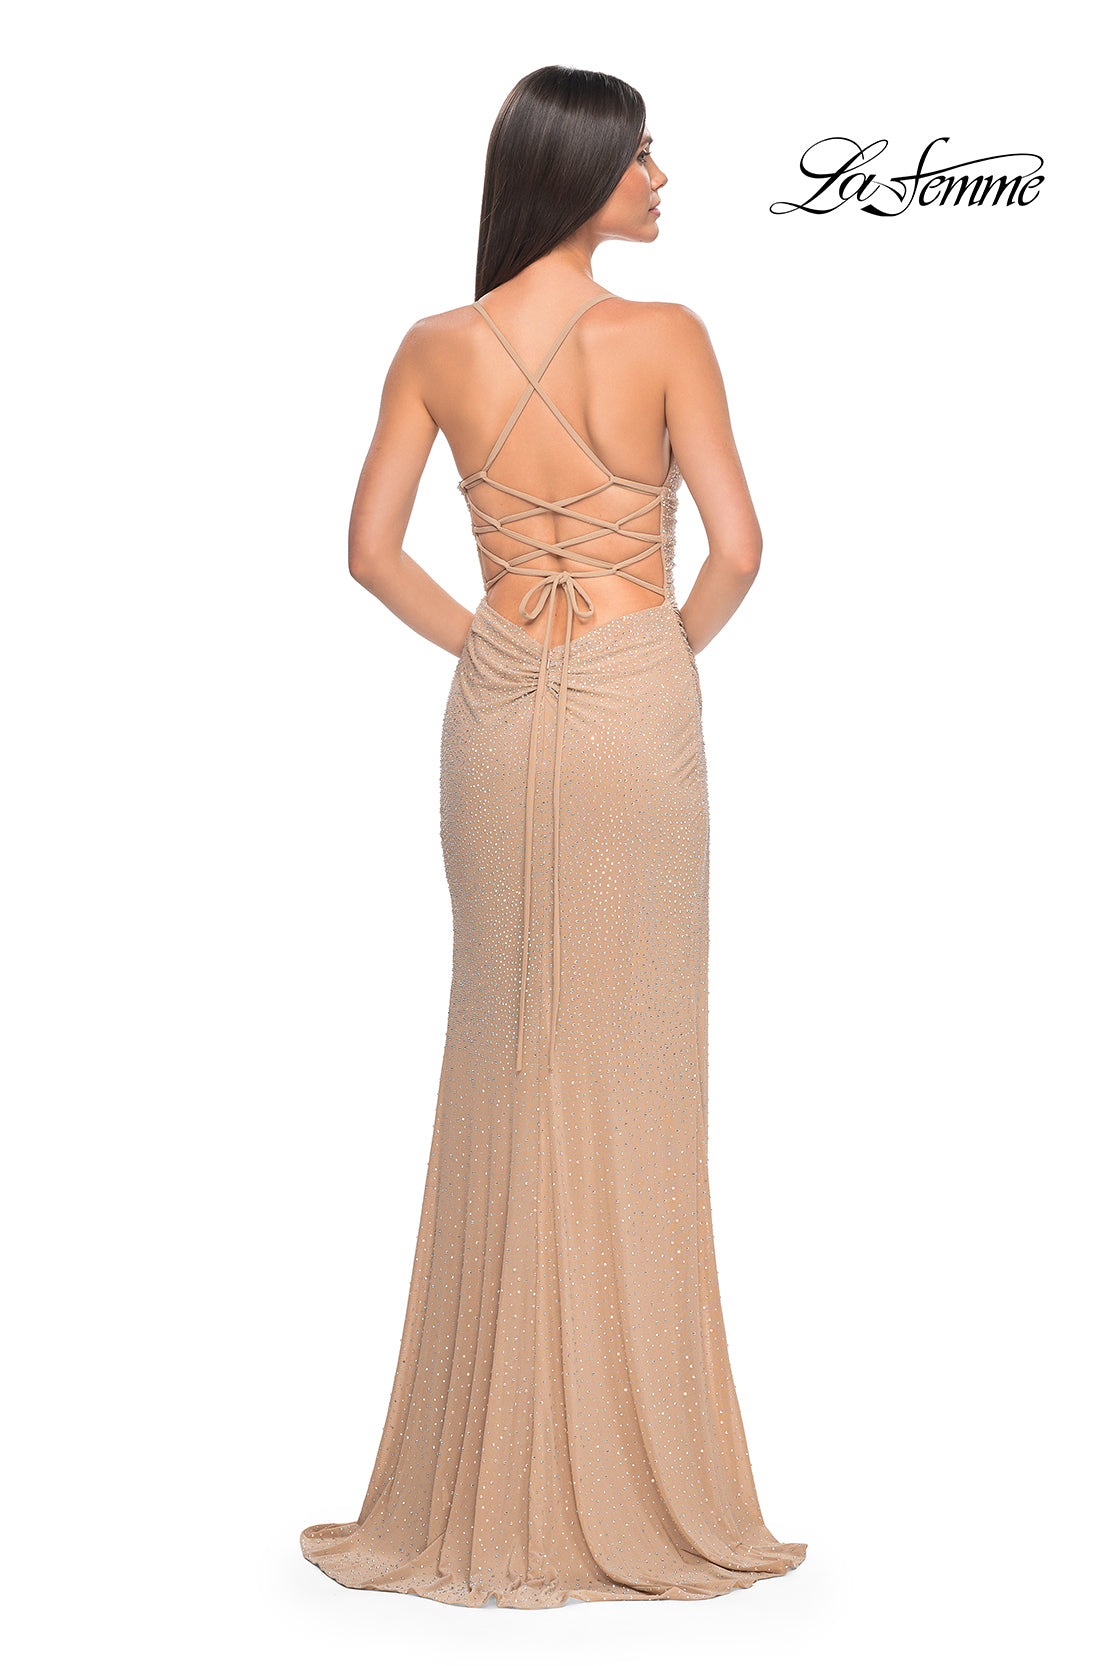 La-Femme-32318-V-Neck-Neckline-Criss-Cross-Back-High-Slit-Hot-Stone-Net-Jersey-Fitted-Nude-Evening-Dress-B-Chic-Fashions-Prom-Dress